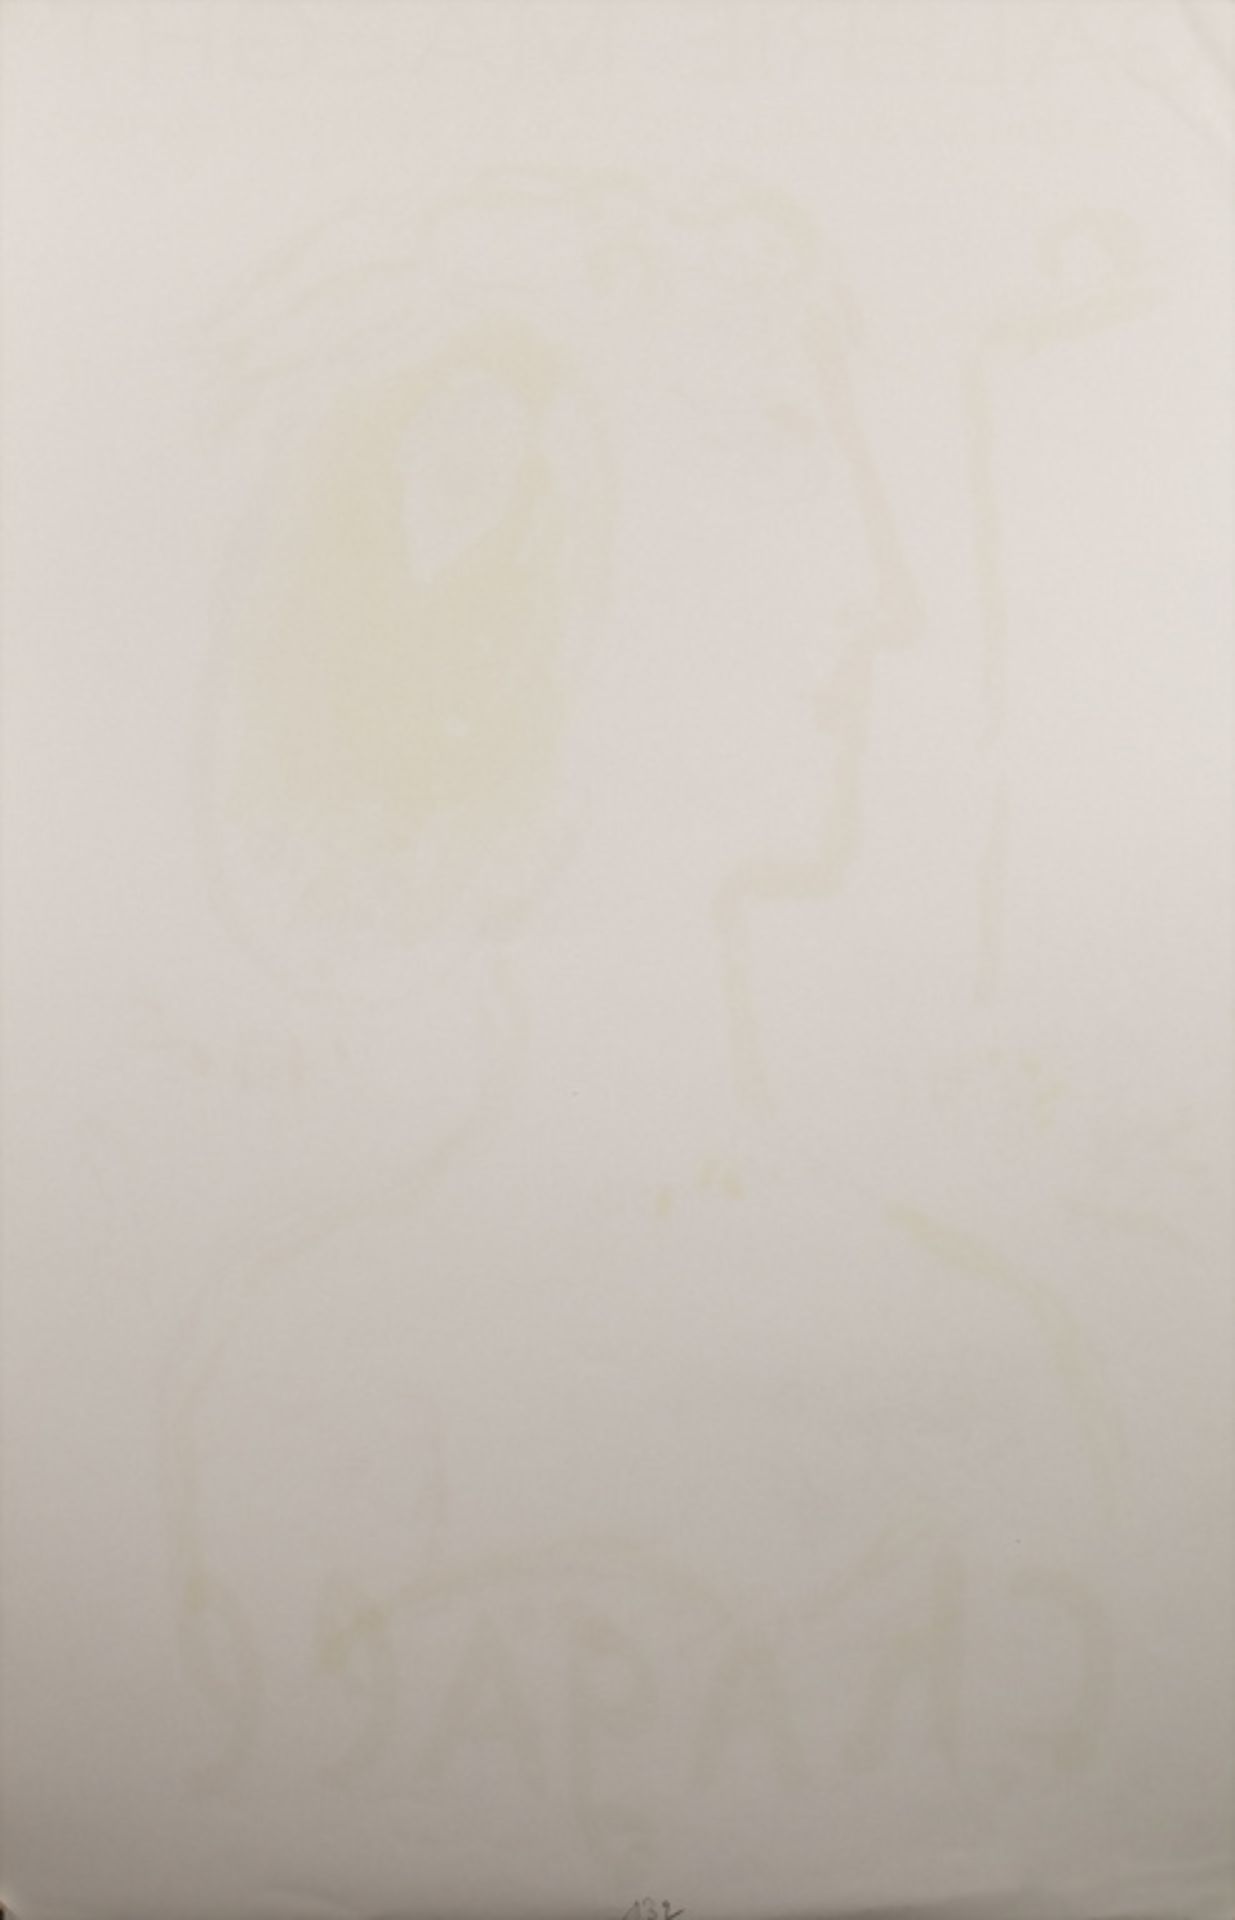 Marc CHAGALL (1887-1985), Ausstellungsplakat / Exhibition poster, Galerie Maeght, Paris, 1972 - Image 2 of 2